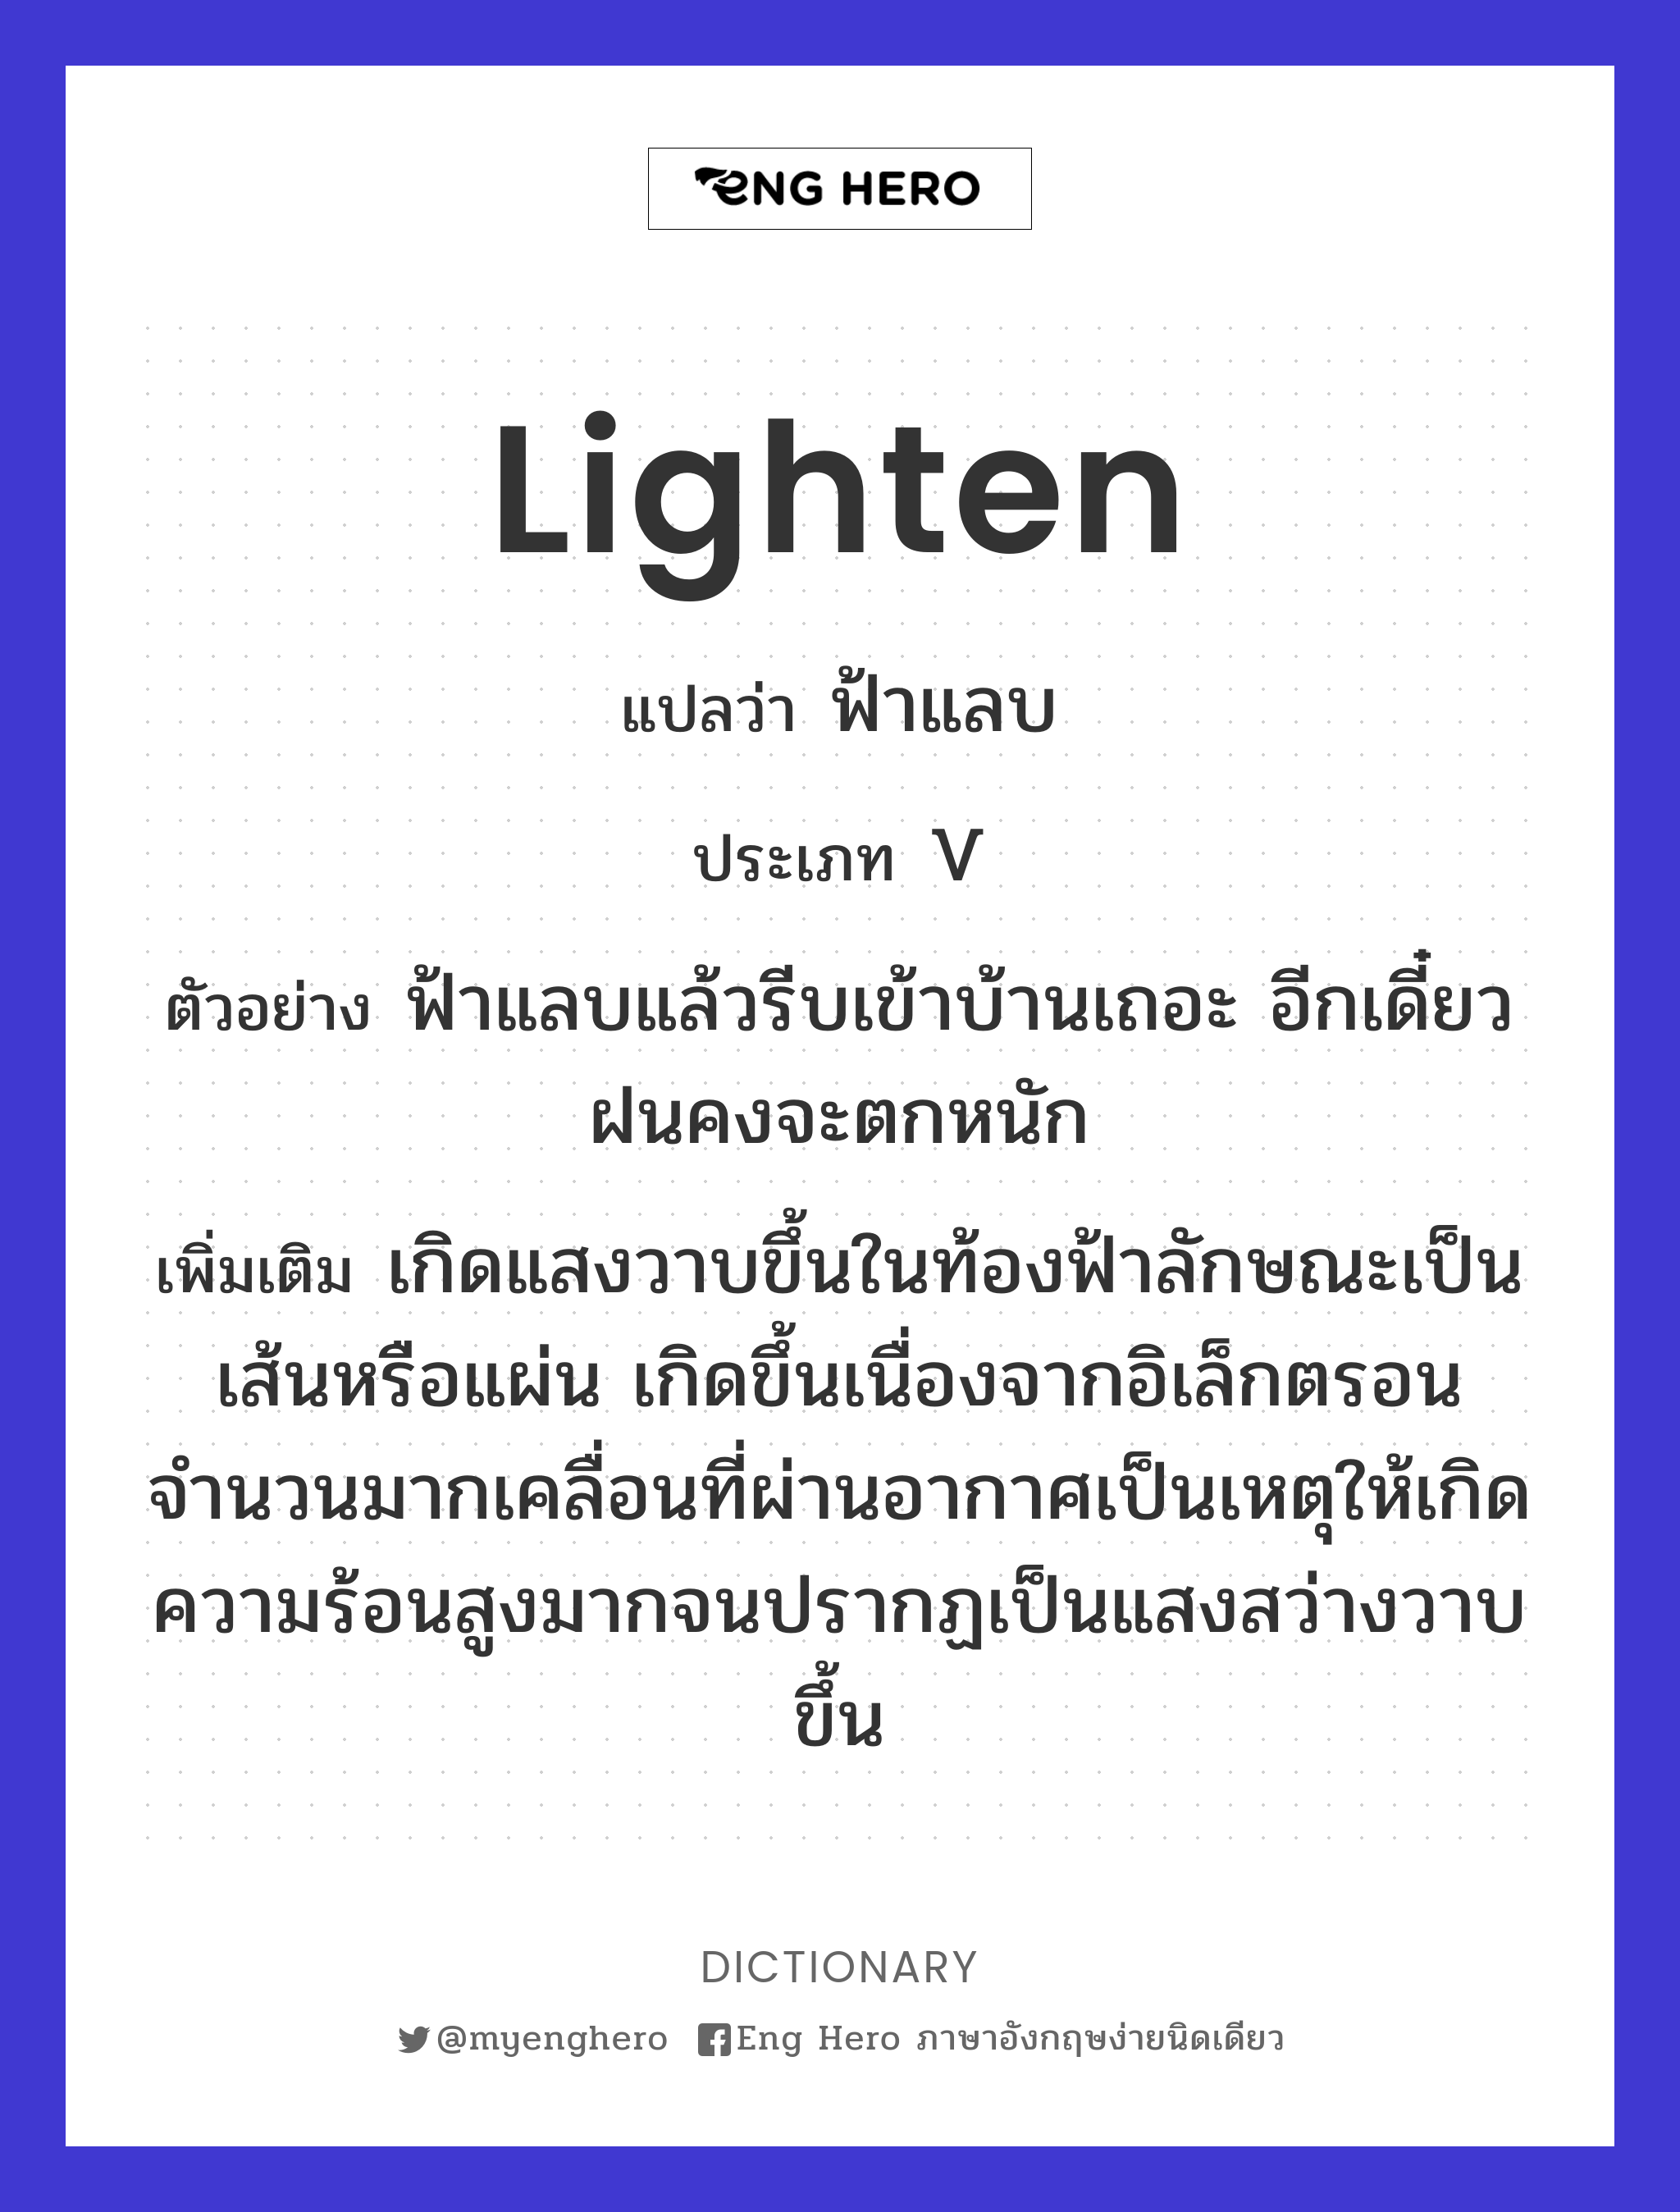 lighten